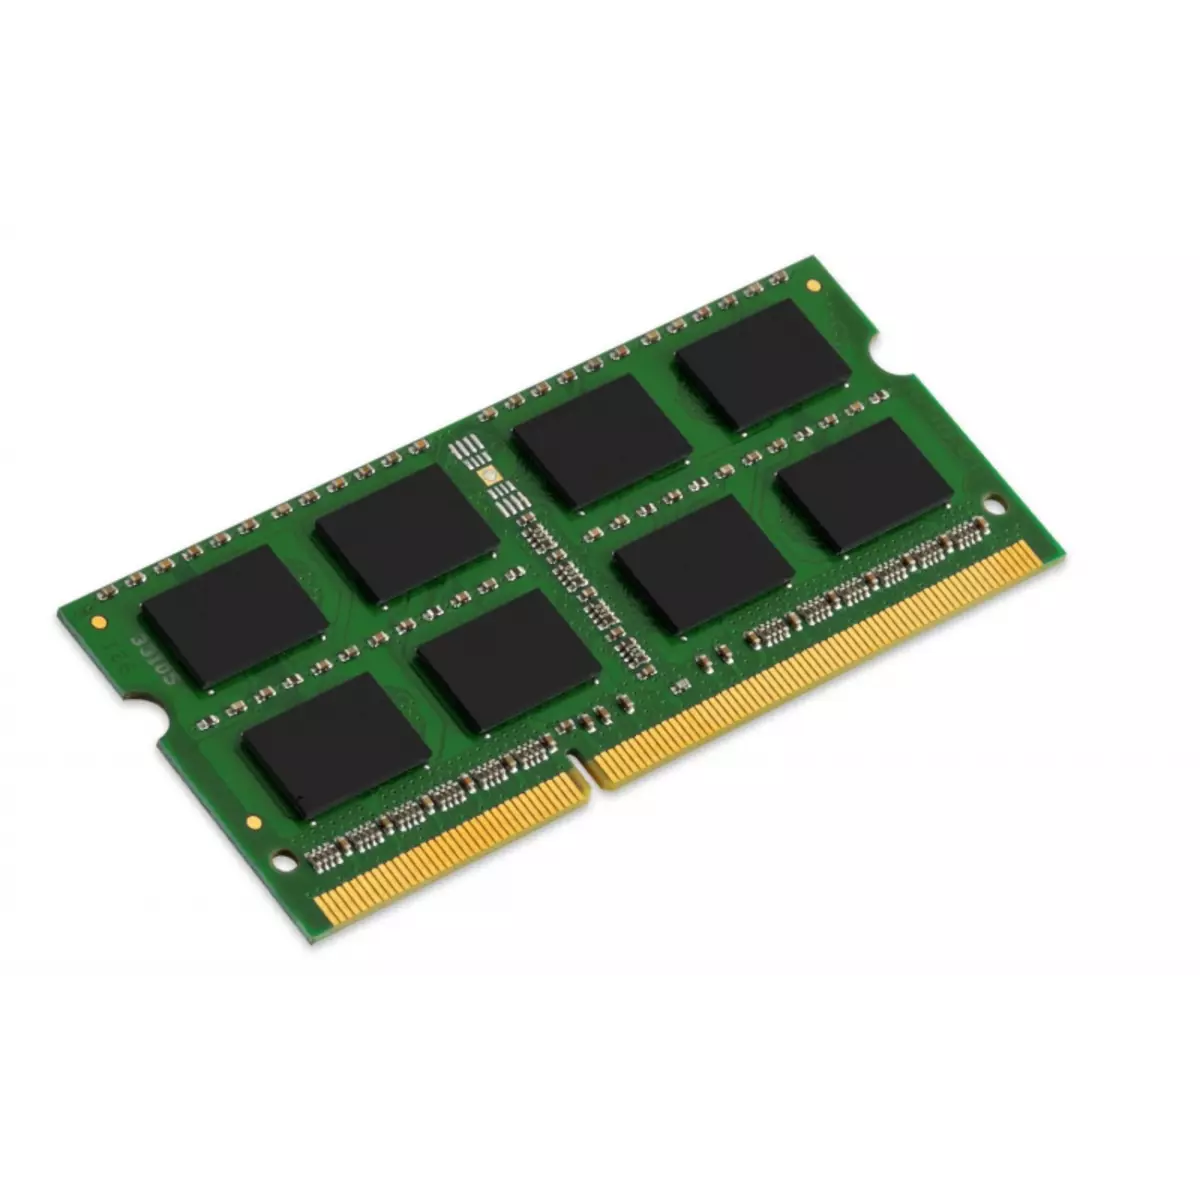 RAM tal-kompjuter (RAM)